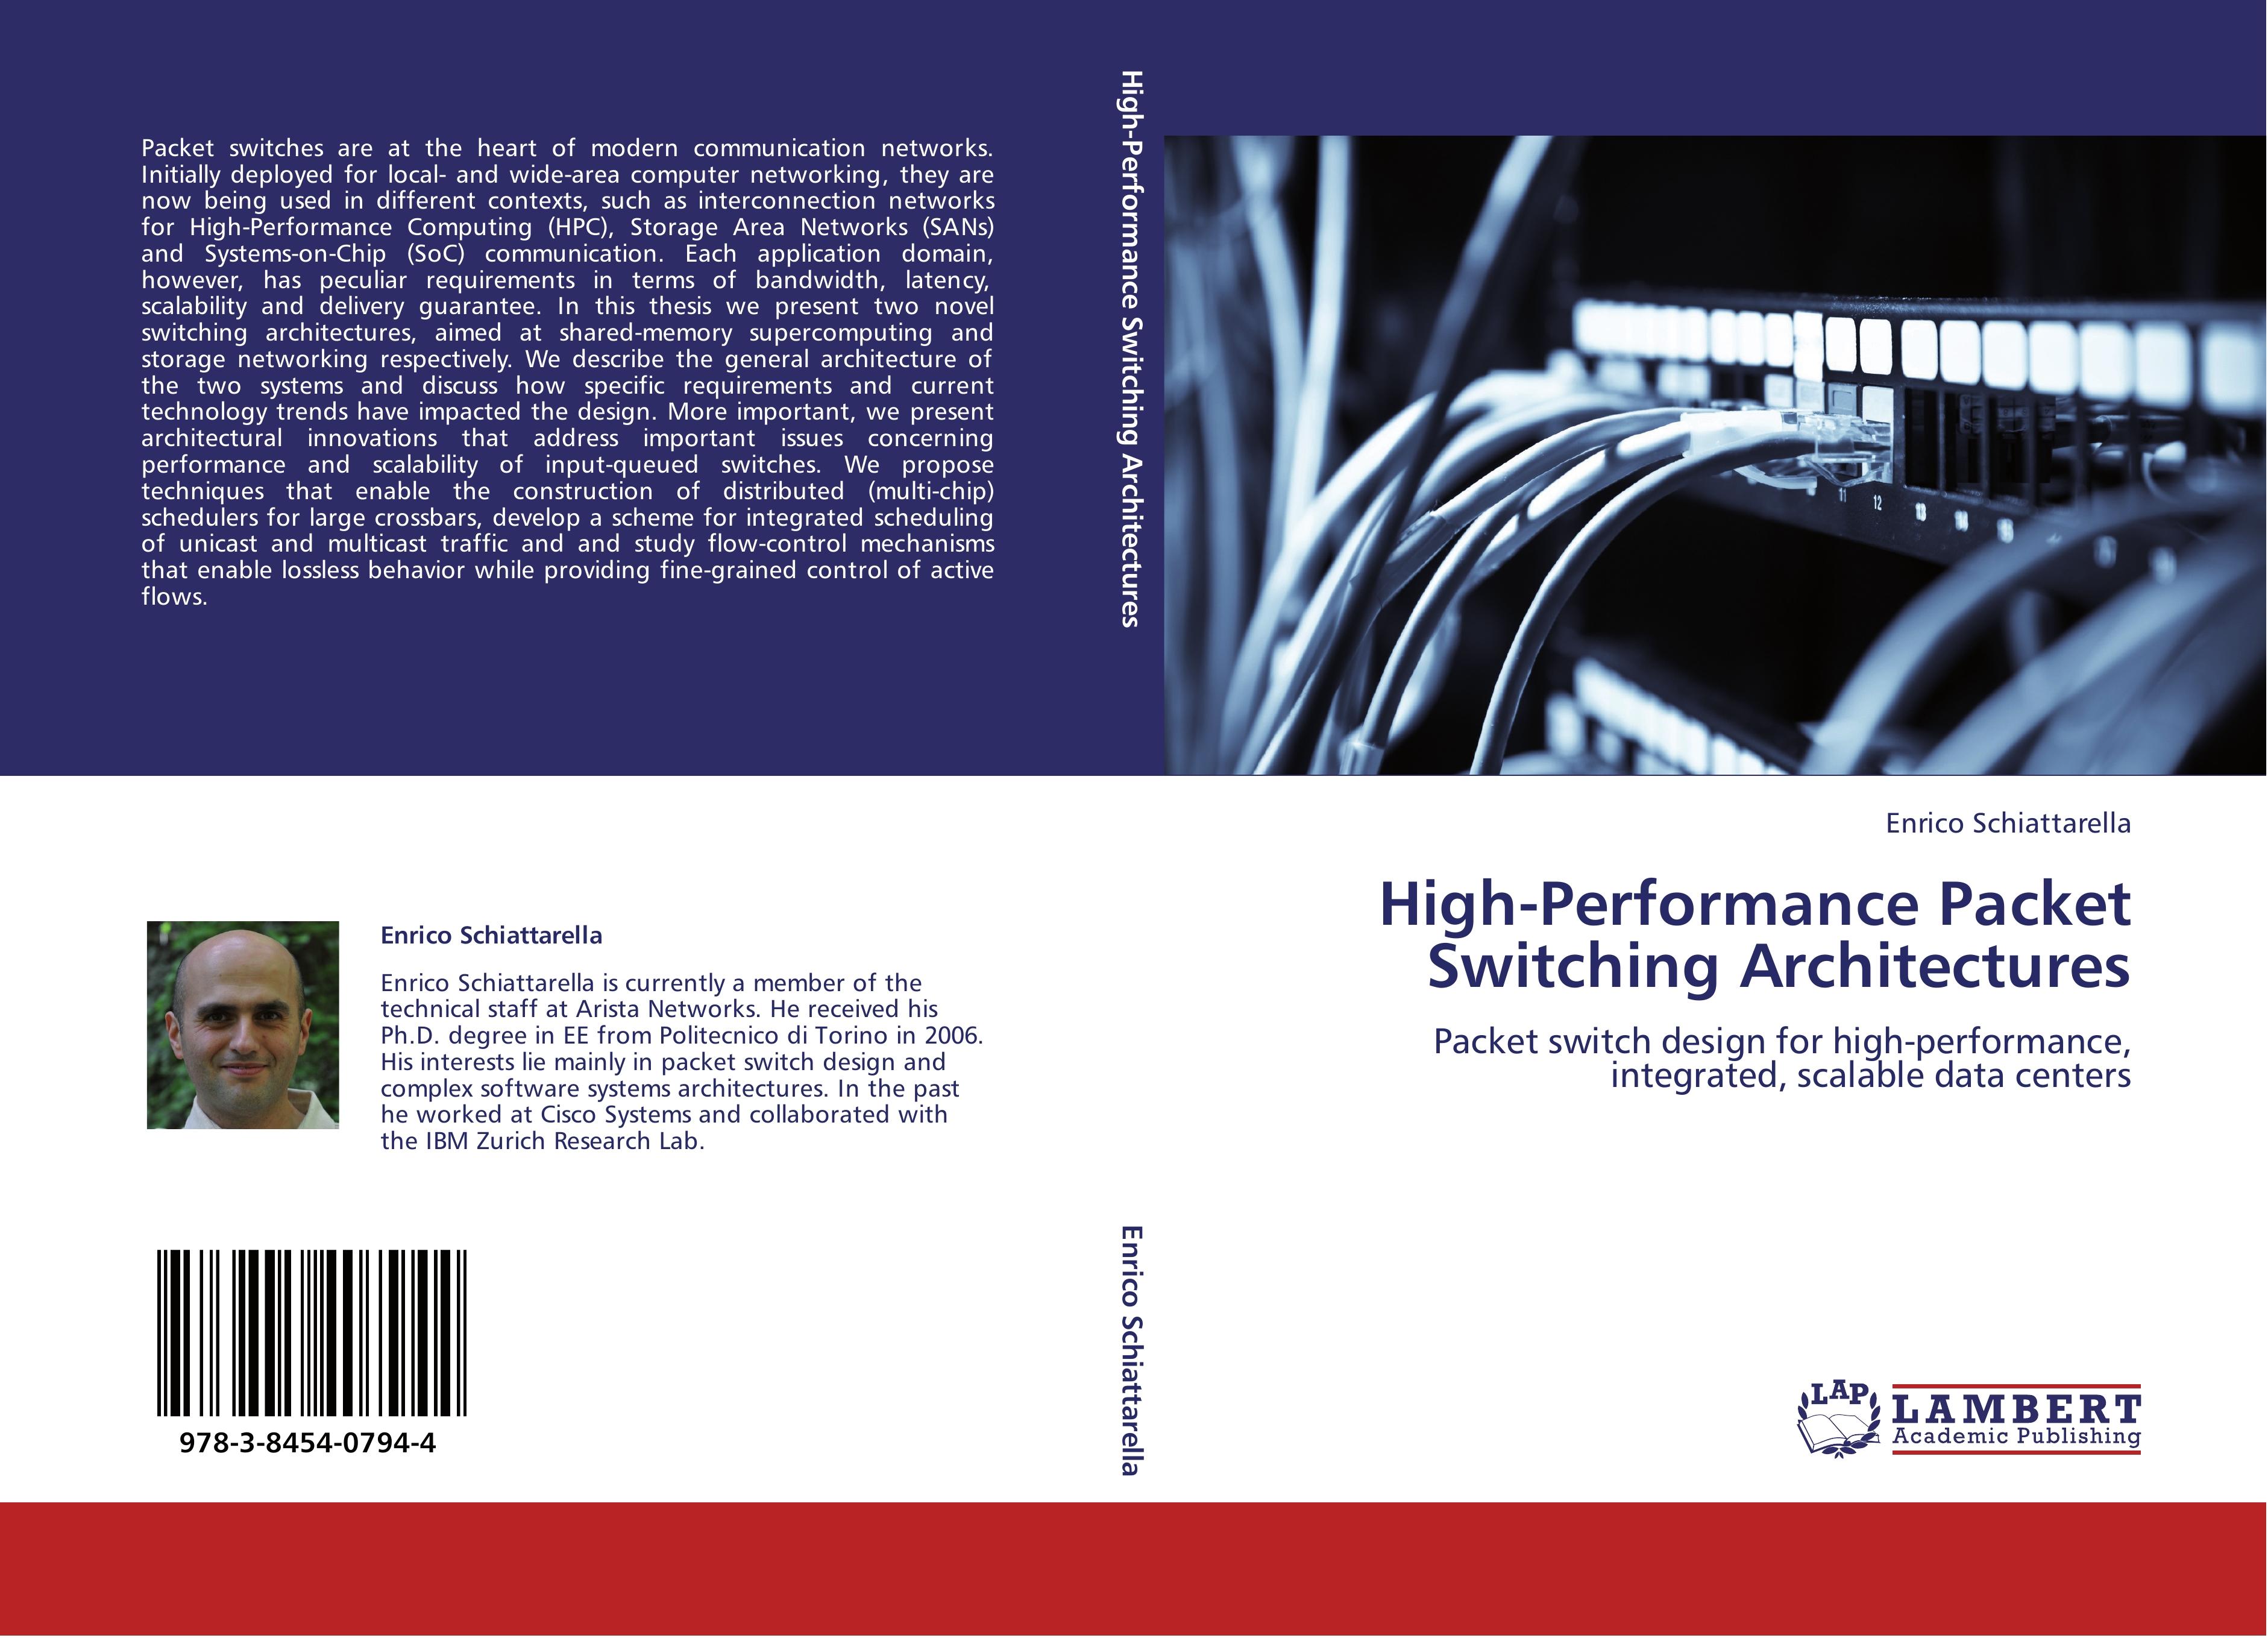 High-Performance Packet Switching Architectures - Enrico Schiattarella